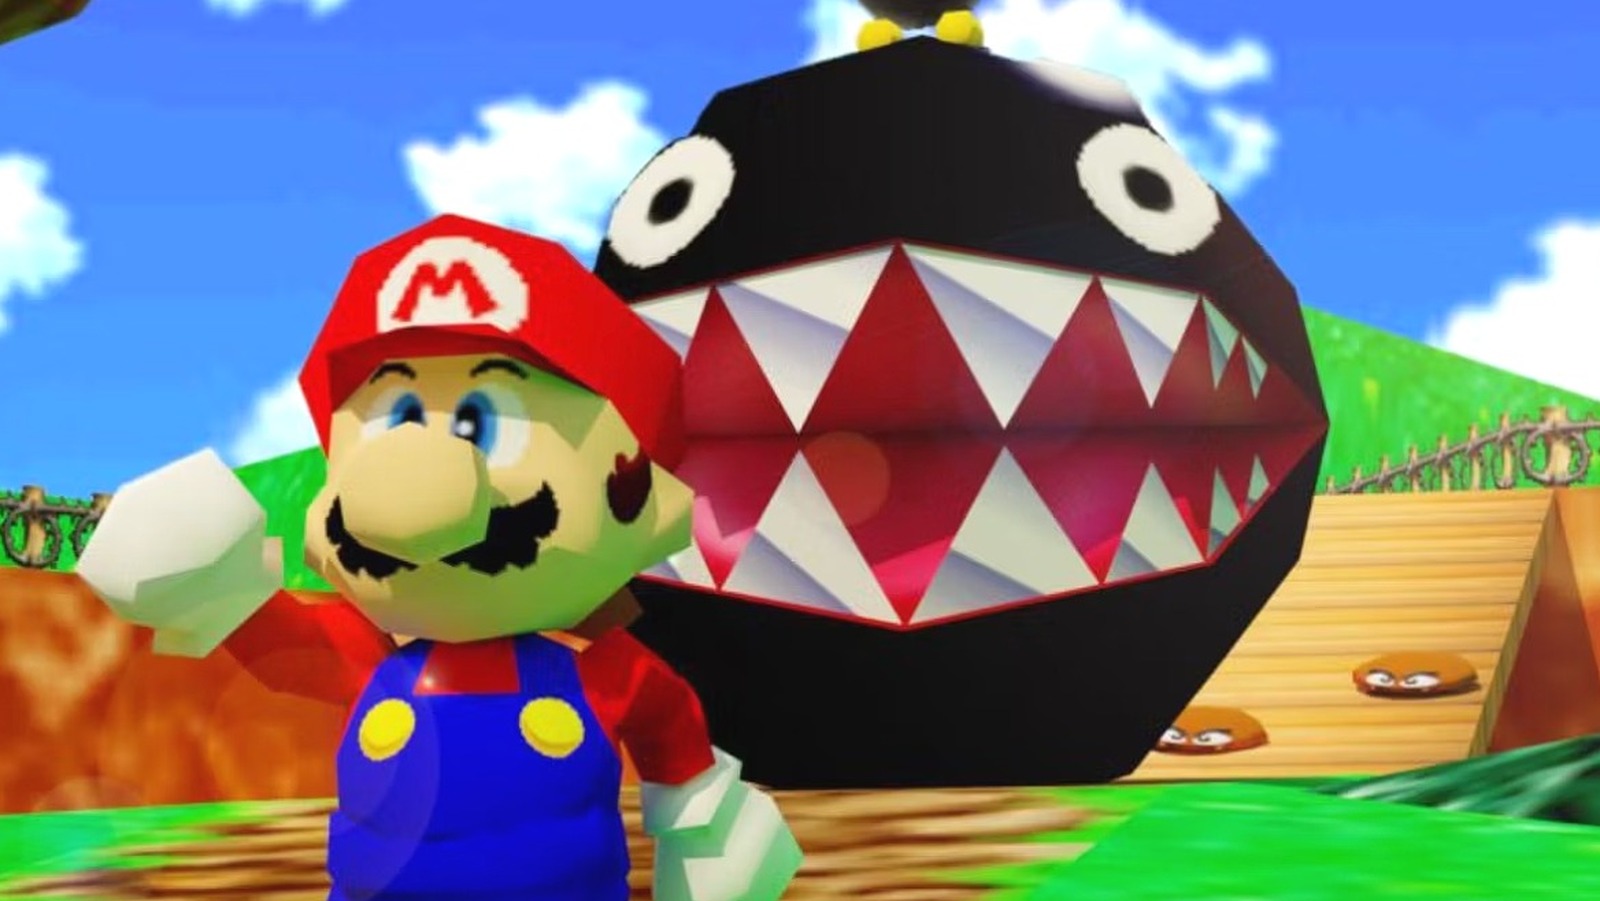 What made Super Mario 64 so special?